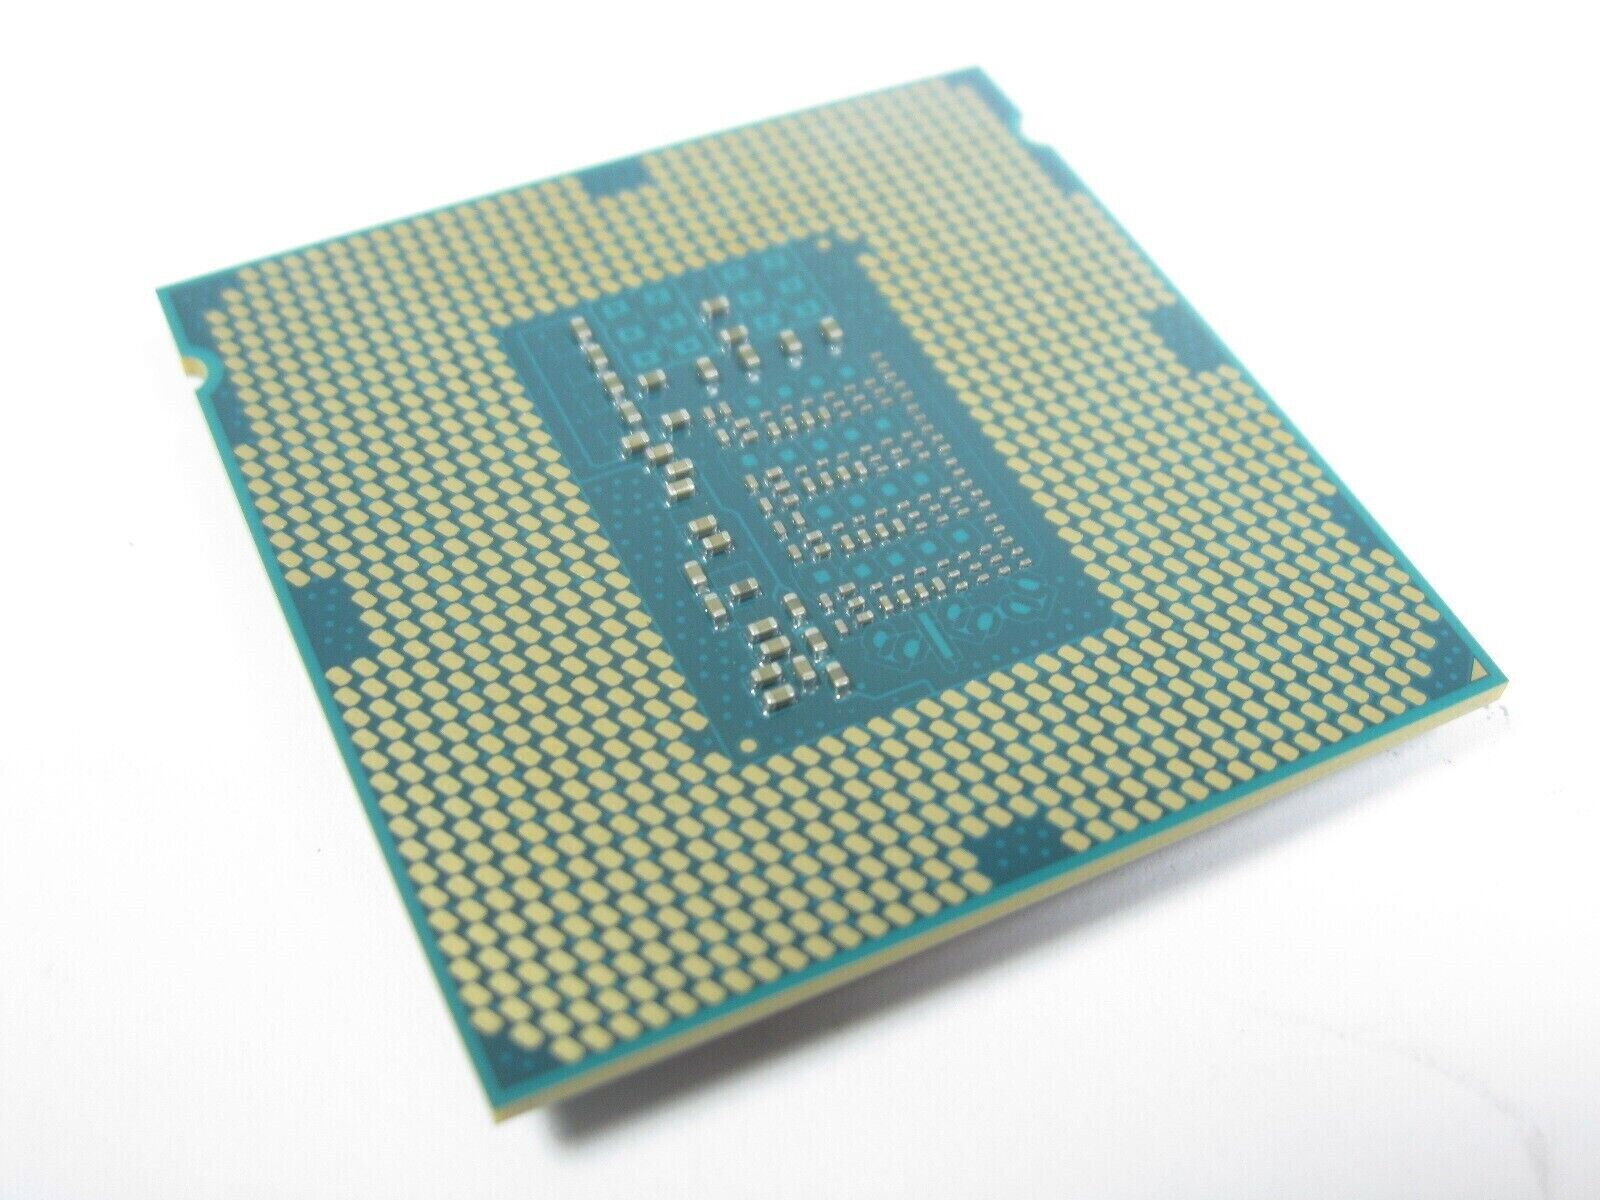 Lot of 2 x Intel Core i7-7700T Quad-Core 2.9GHz SR339 CPU Processor 